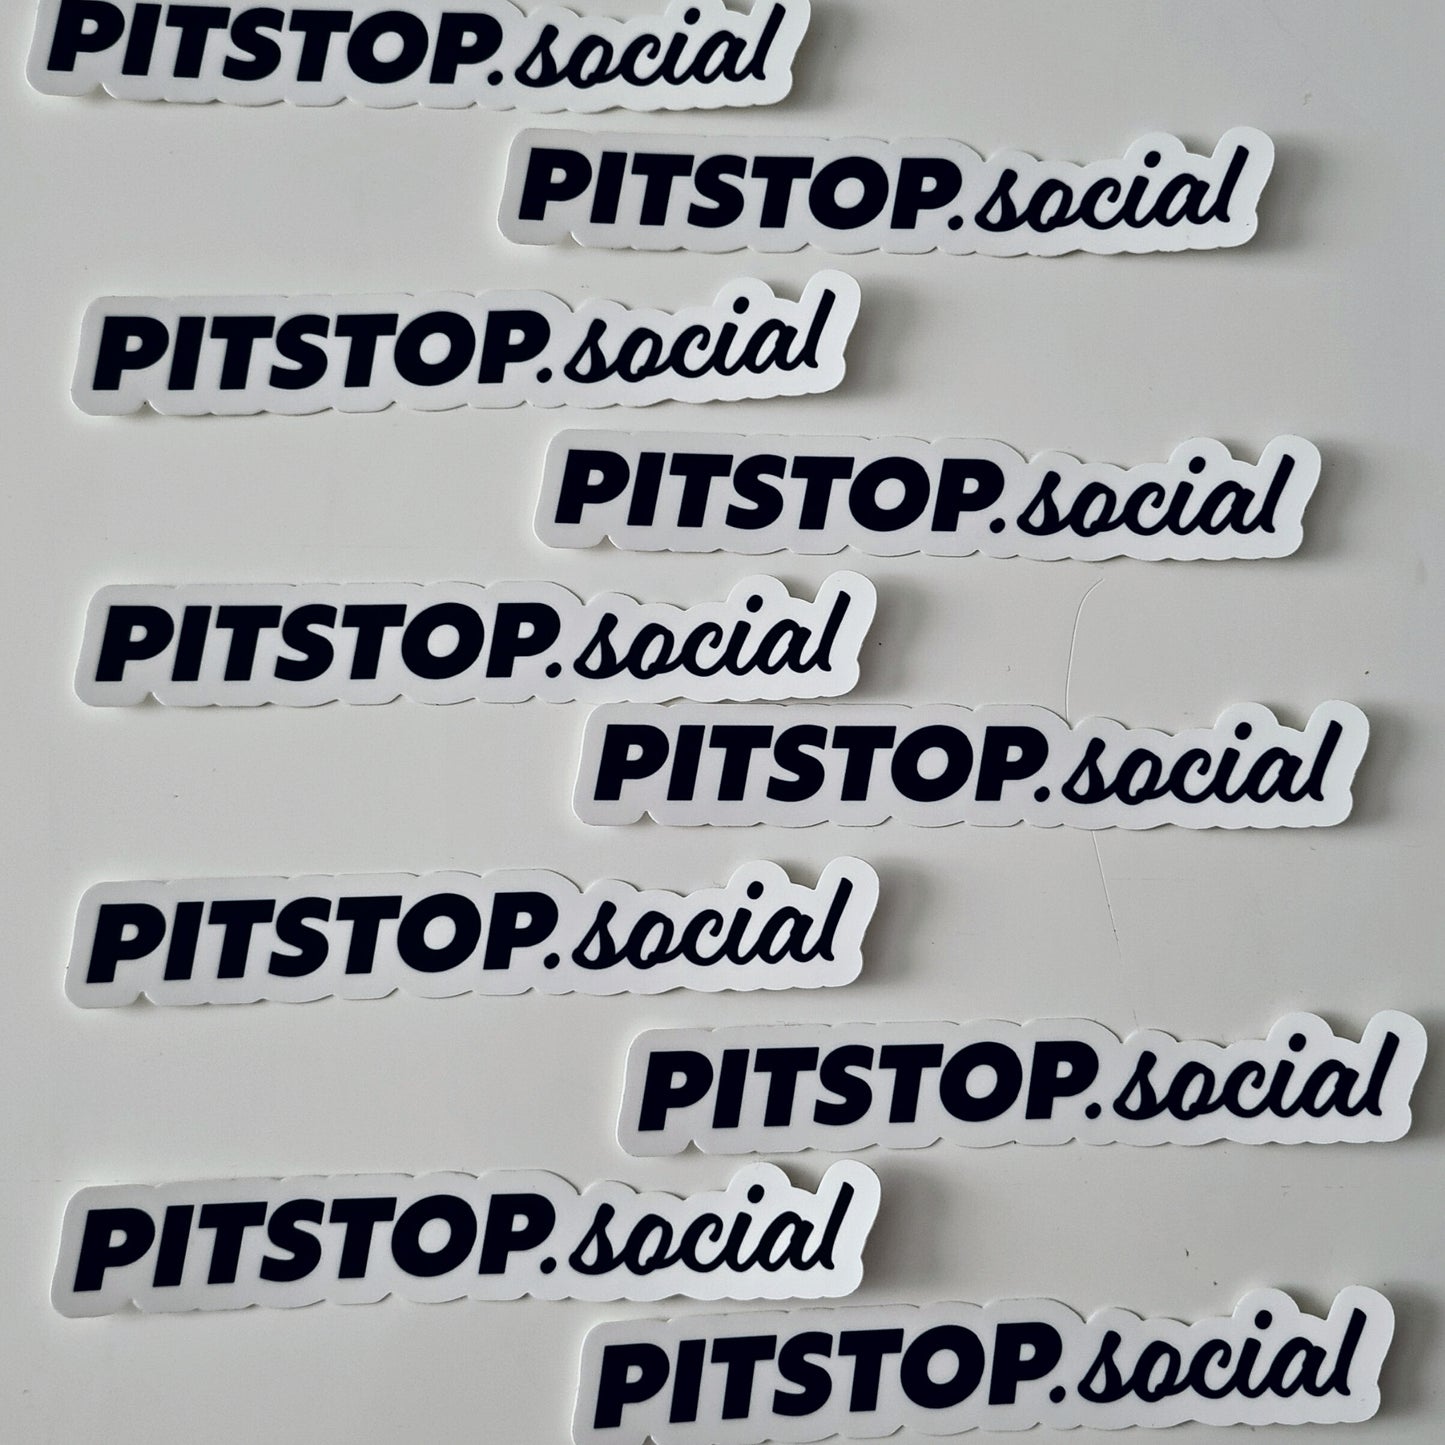 Pitstop Social Black and White 6" Logo Sticker